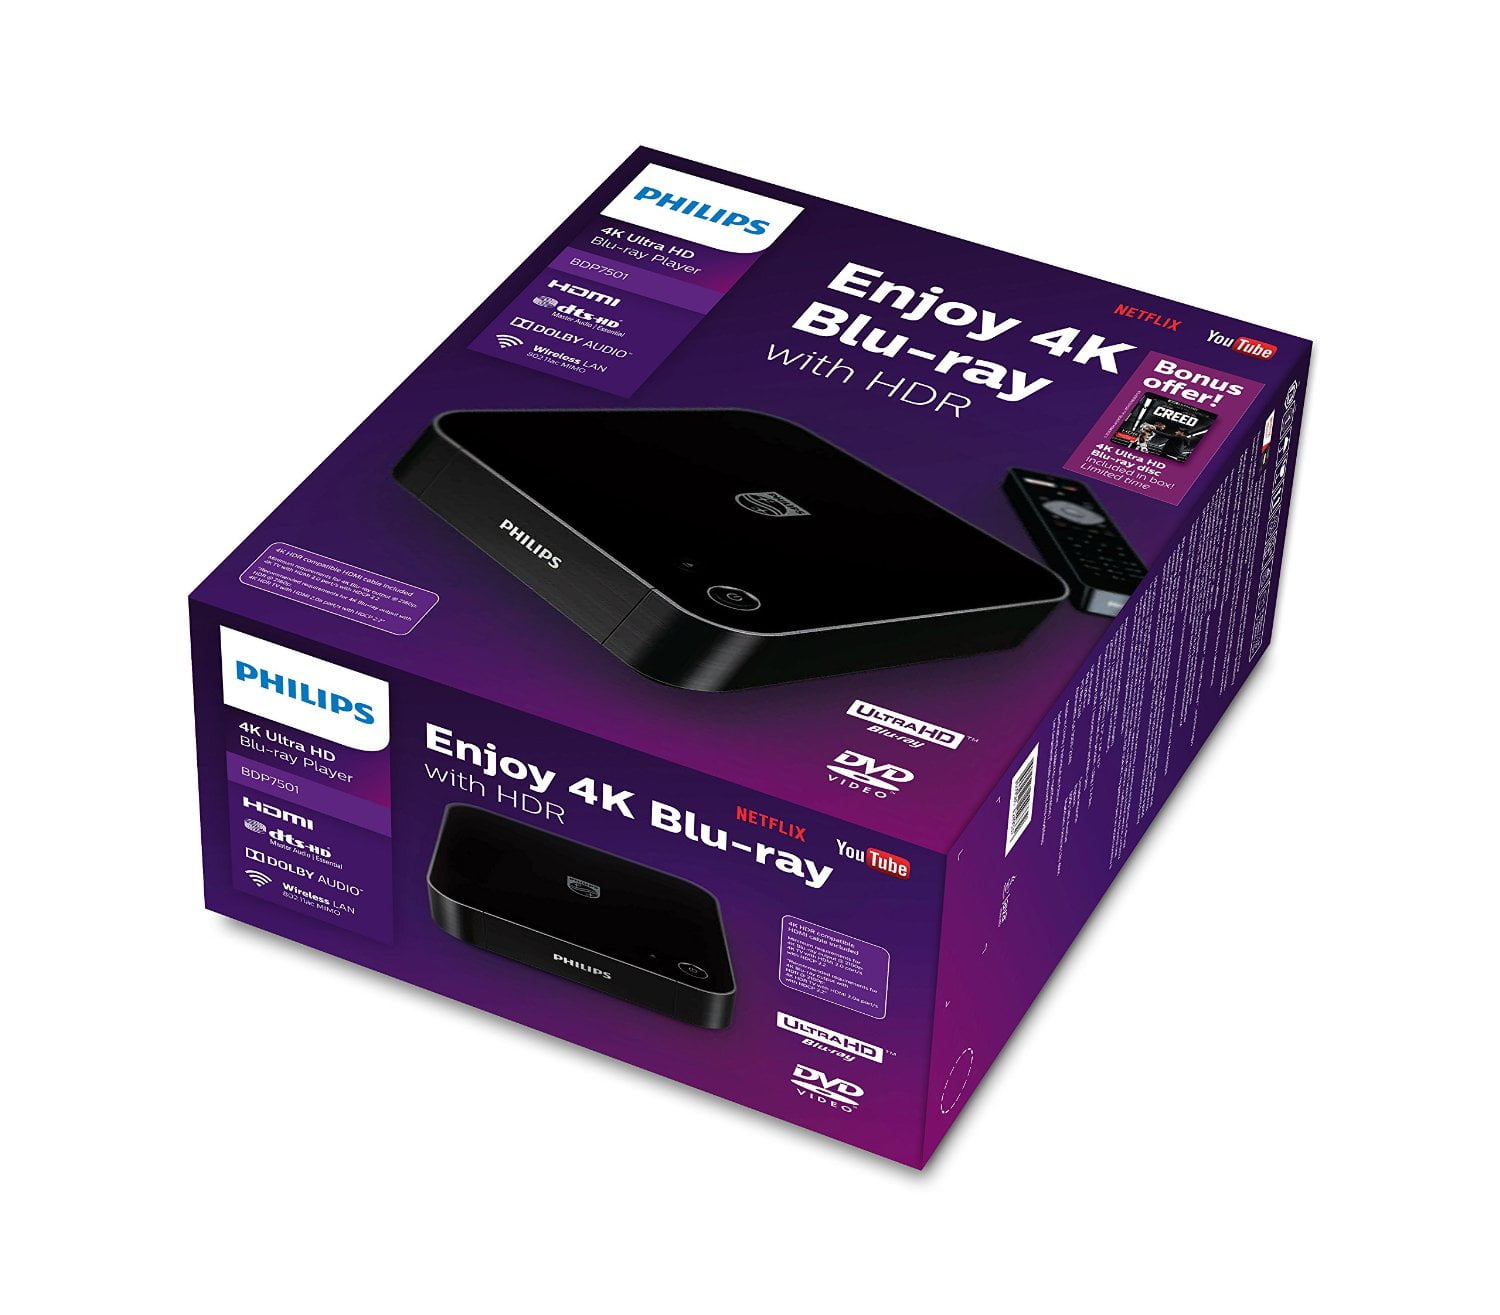 4K Ultra HD Blu-ray Player BDP7501/F7